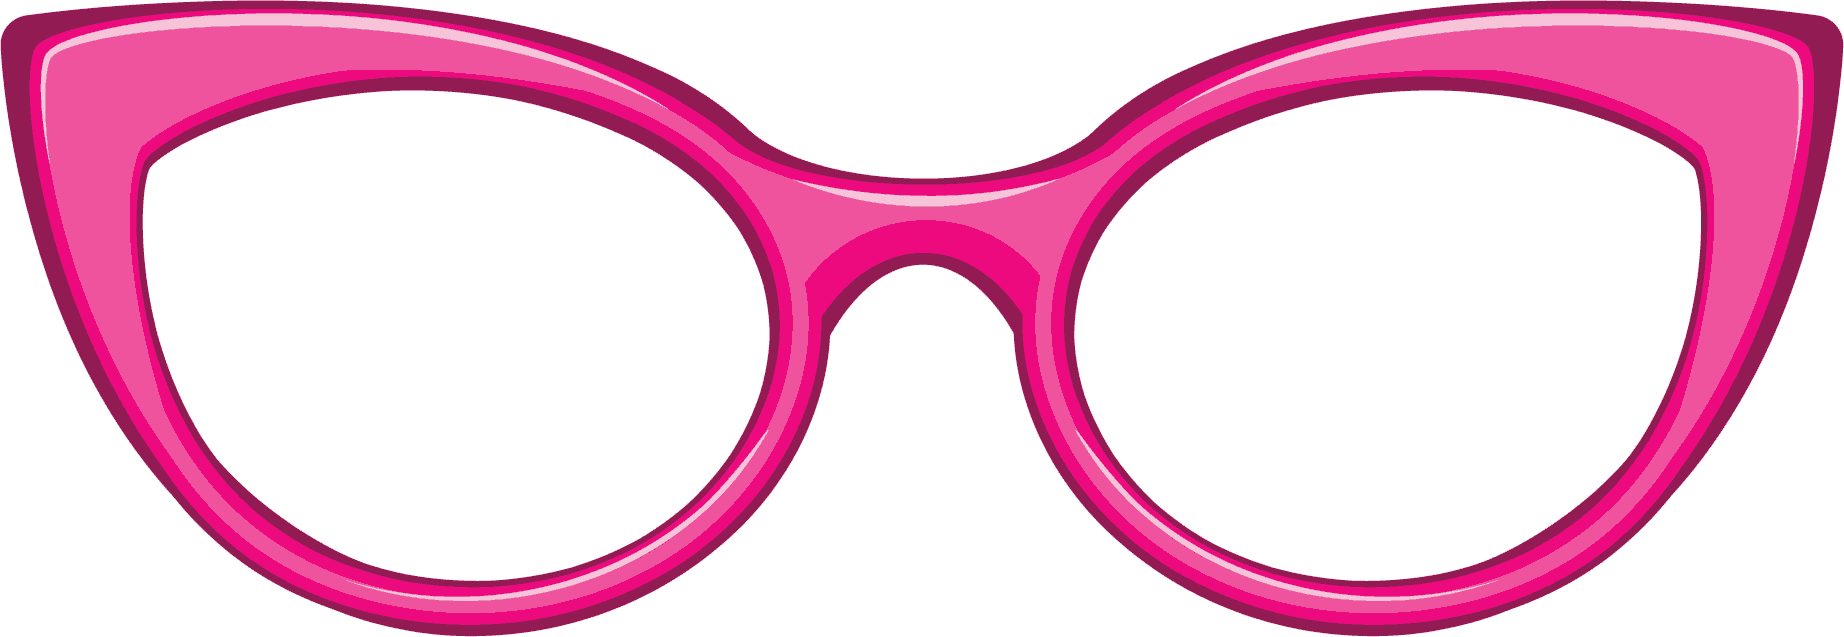 Vision clipart goggles frame. Smiley sunglasses clipartwiz clipartix